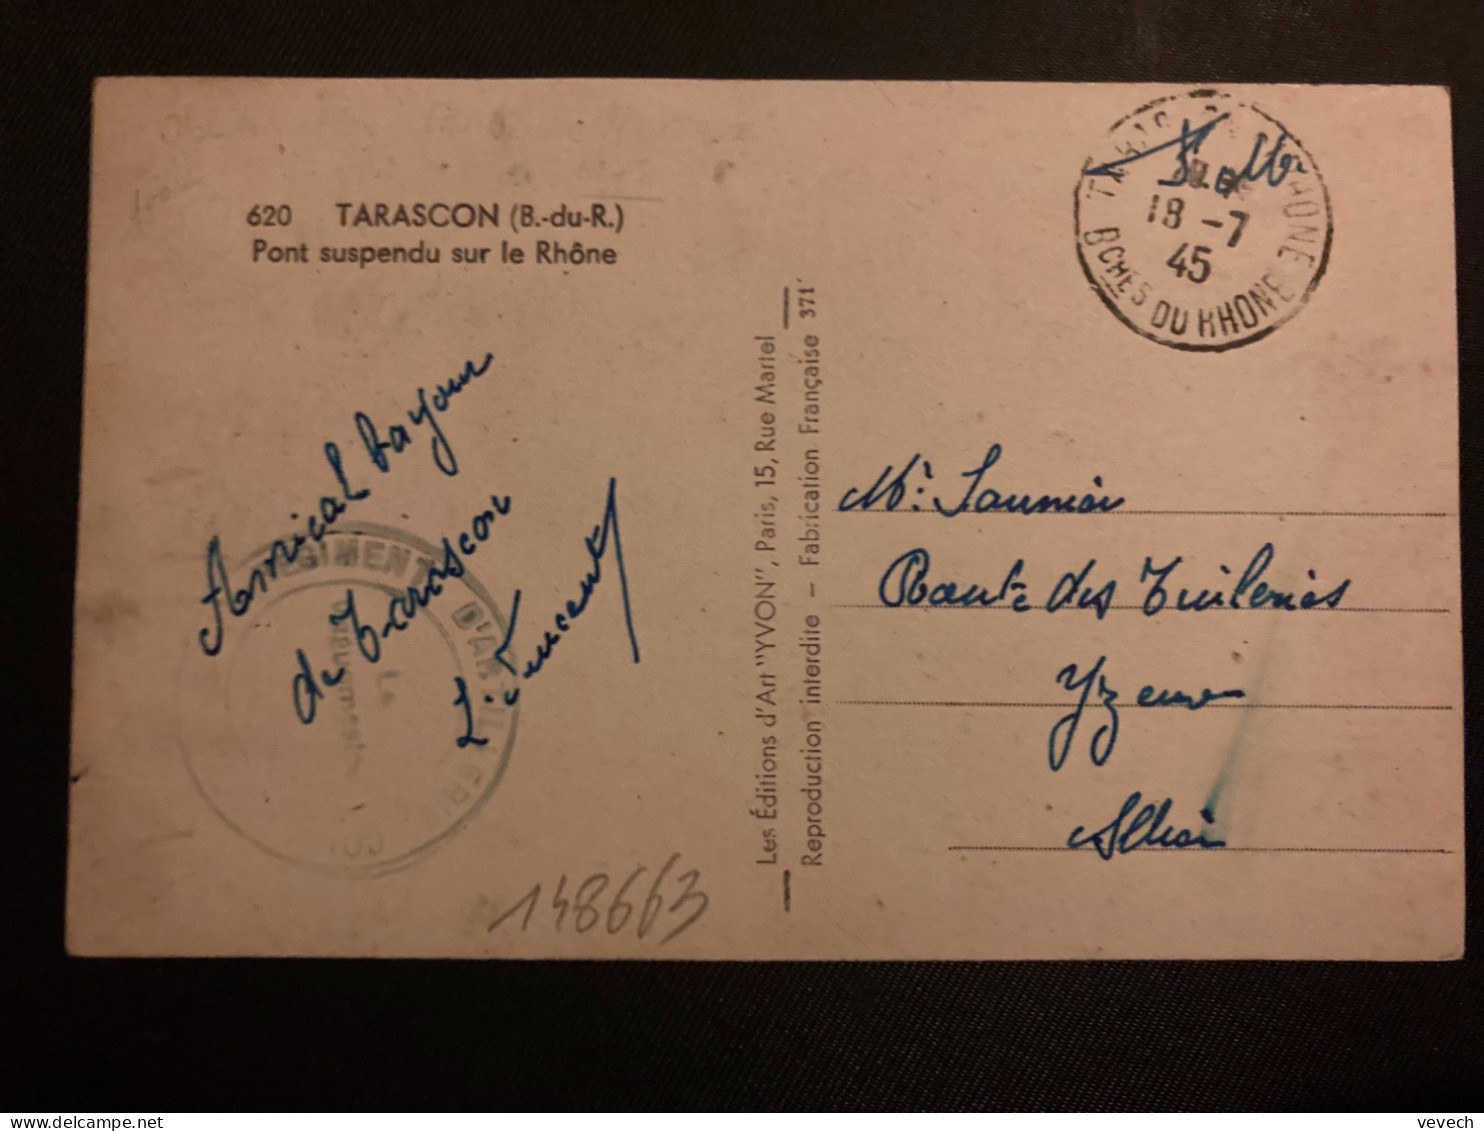 CP TARASCON En FM OBL.18-7 45 TARASCON S/RHONE Bches DU RHONE (13) REGIMENT D'ARTILLERIE - Guerre De 1939-45